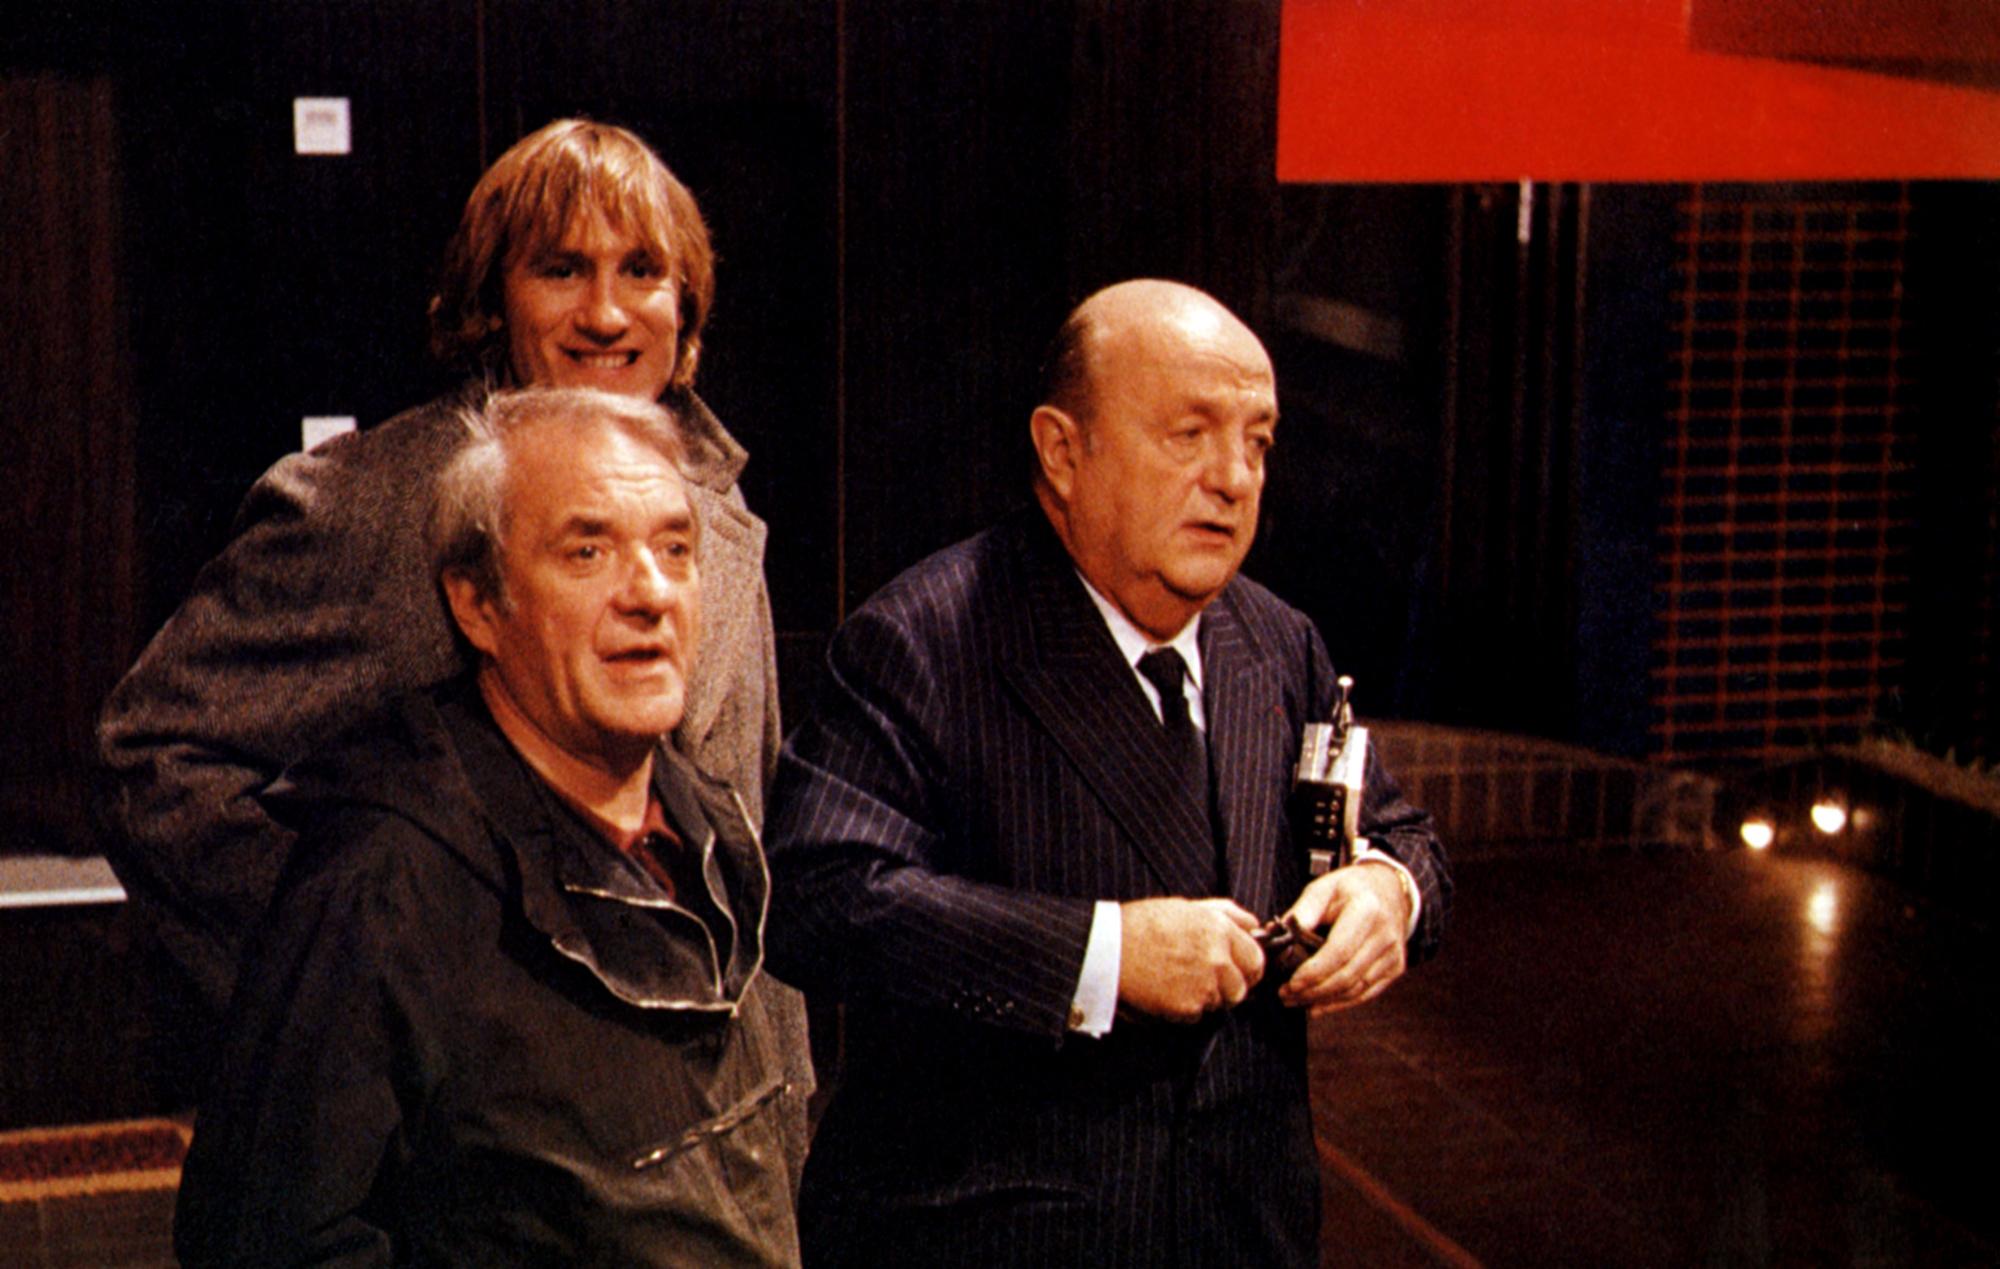 Jean Carmet, Gérard Depardieu, Bernard Blier dans "Buffet froid" de Bertrand Blier en 1979. [AFP - COLLECTION CHRISTOPHEL]